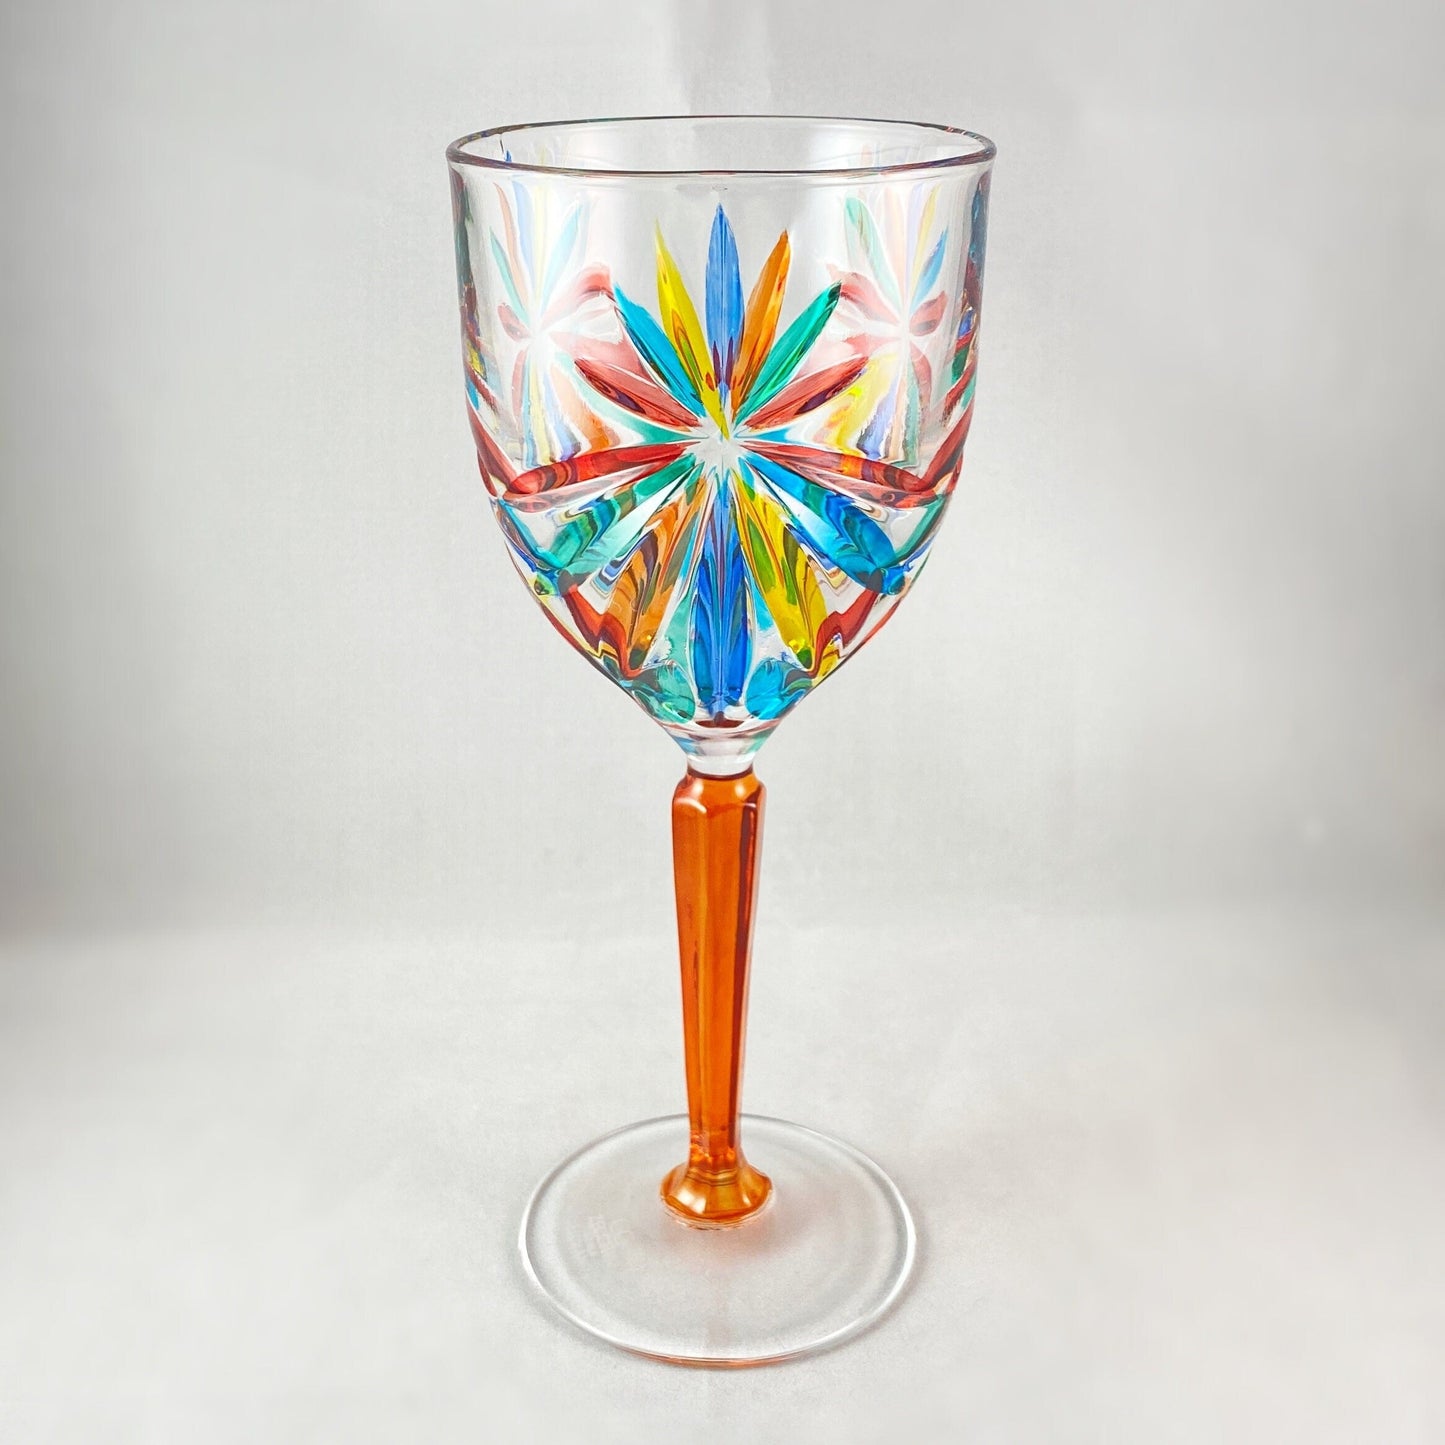 Orange Stem Venetian Glass Oasis Wine Glass - Handmade in Italy, Colorful Murano Glass